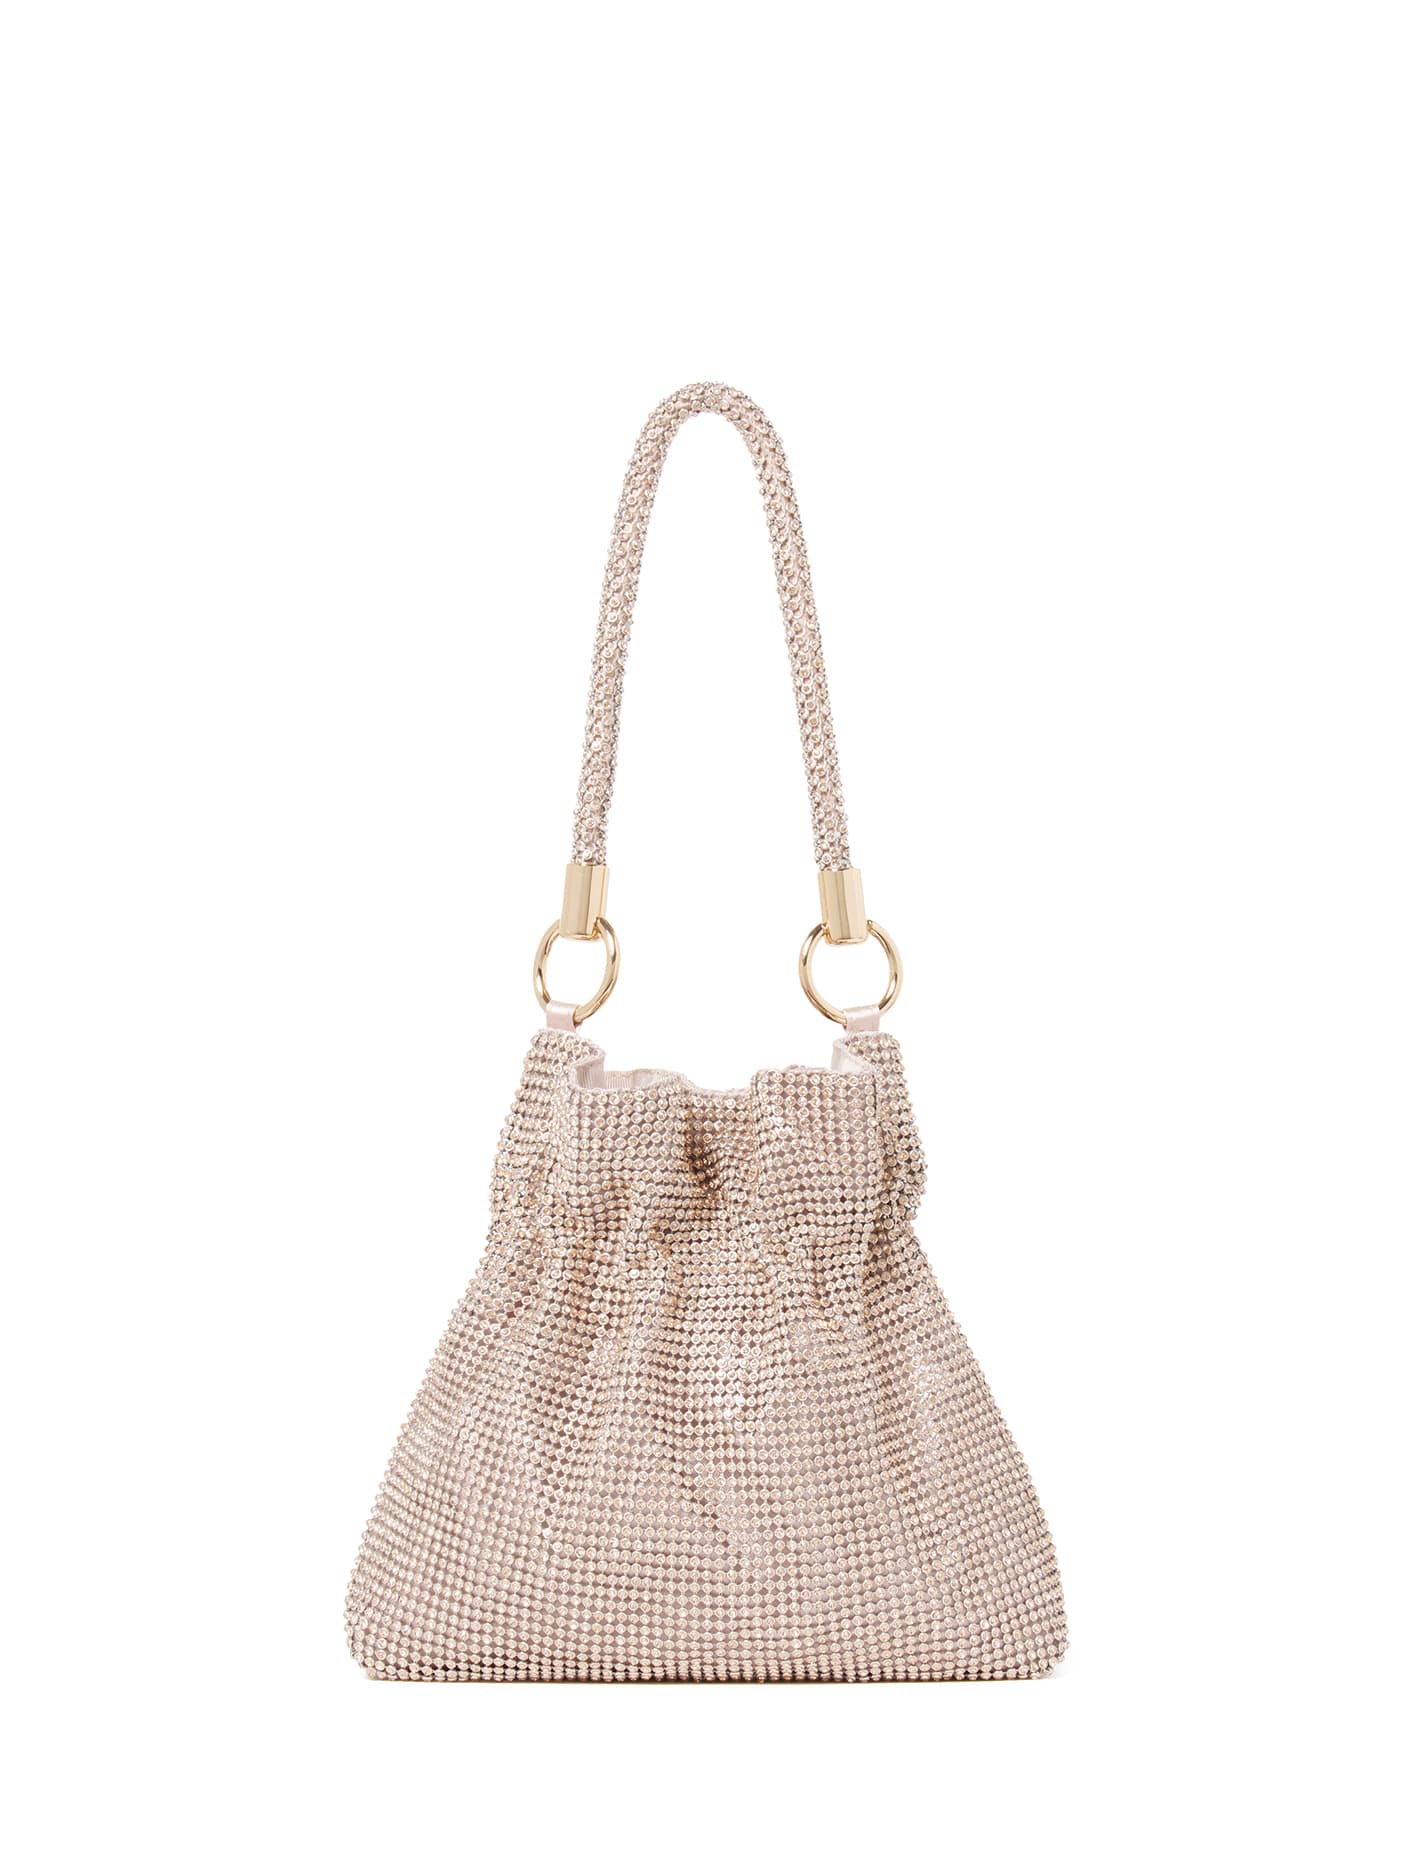 Jess Sparkle Bag Champagne | Forever New